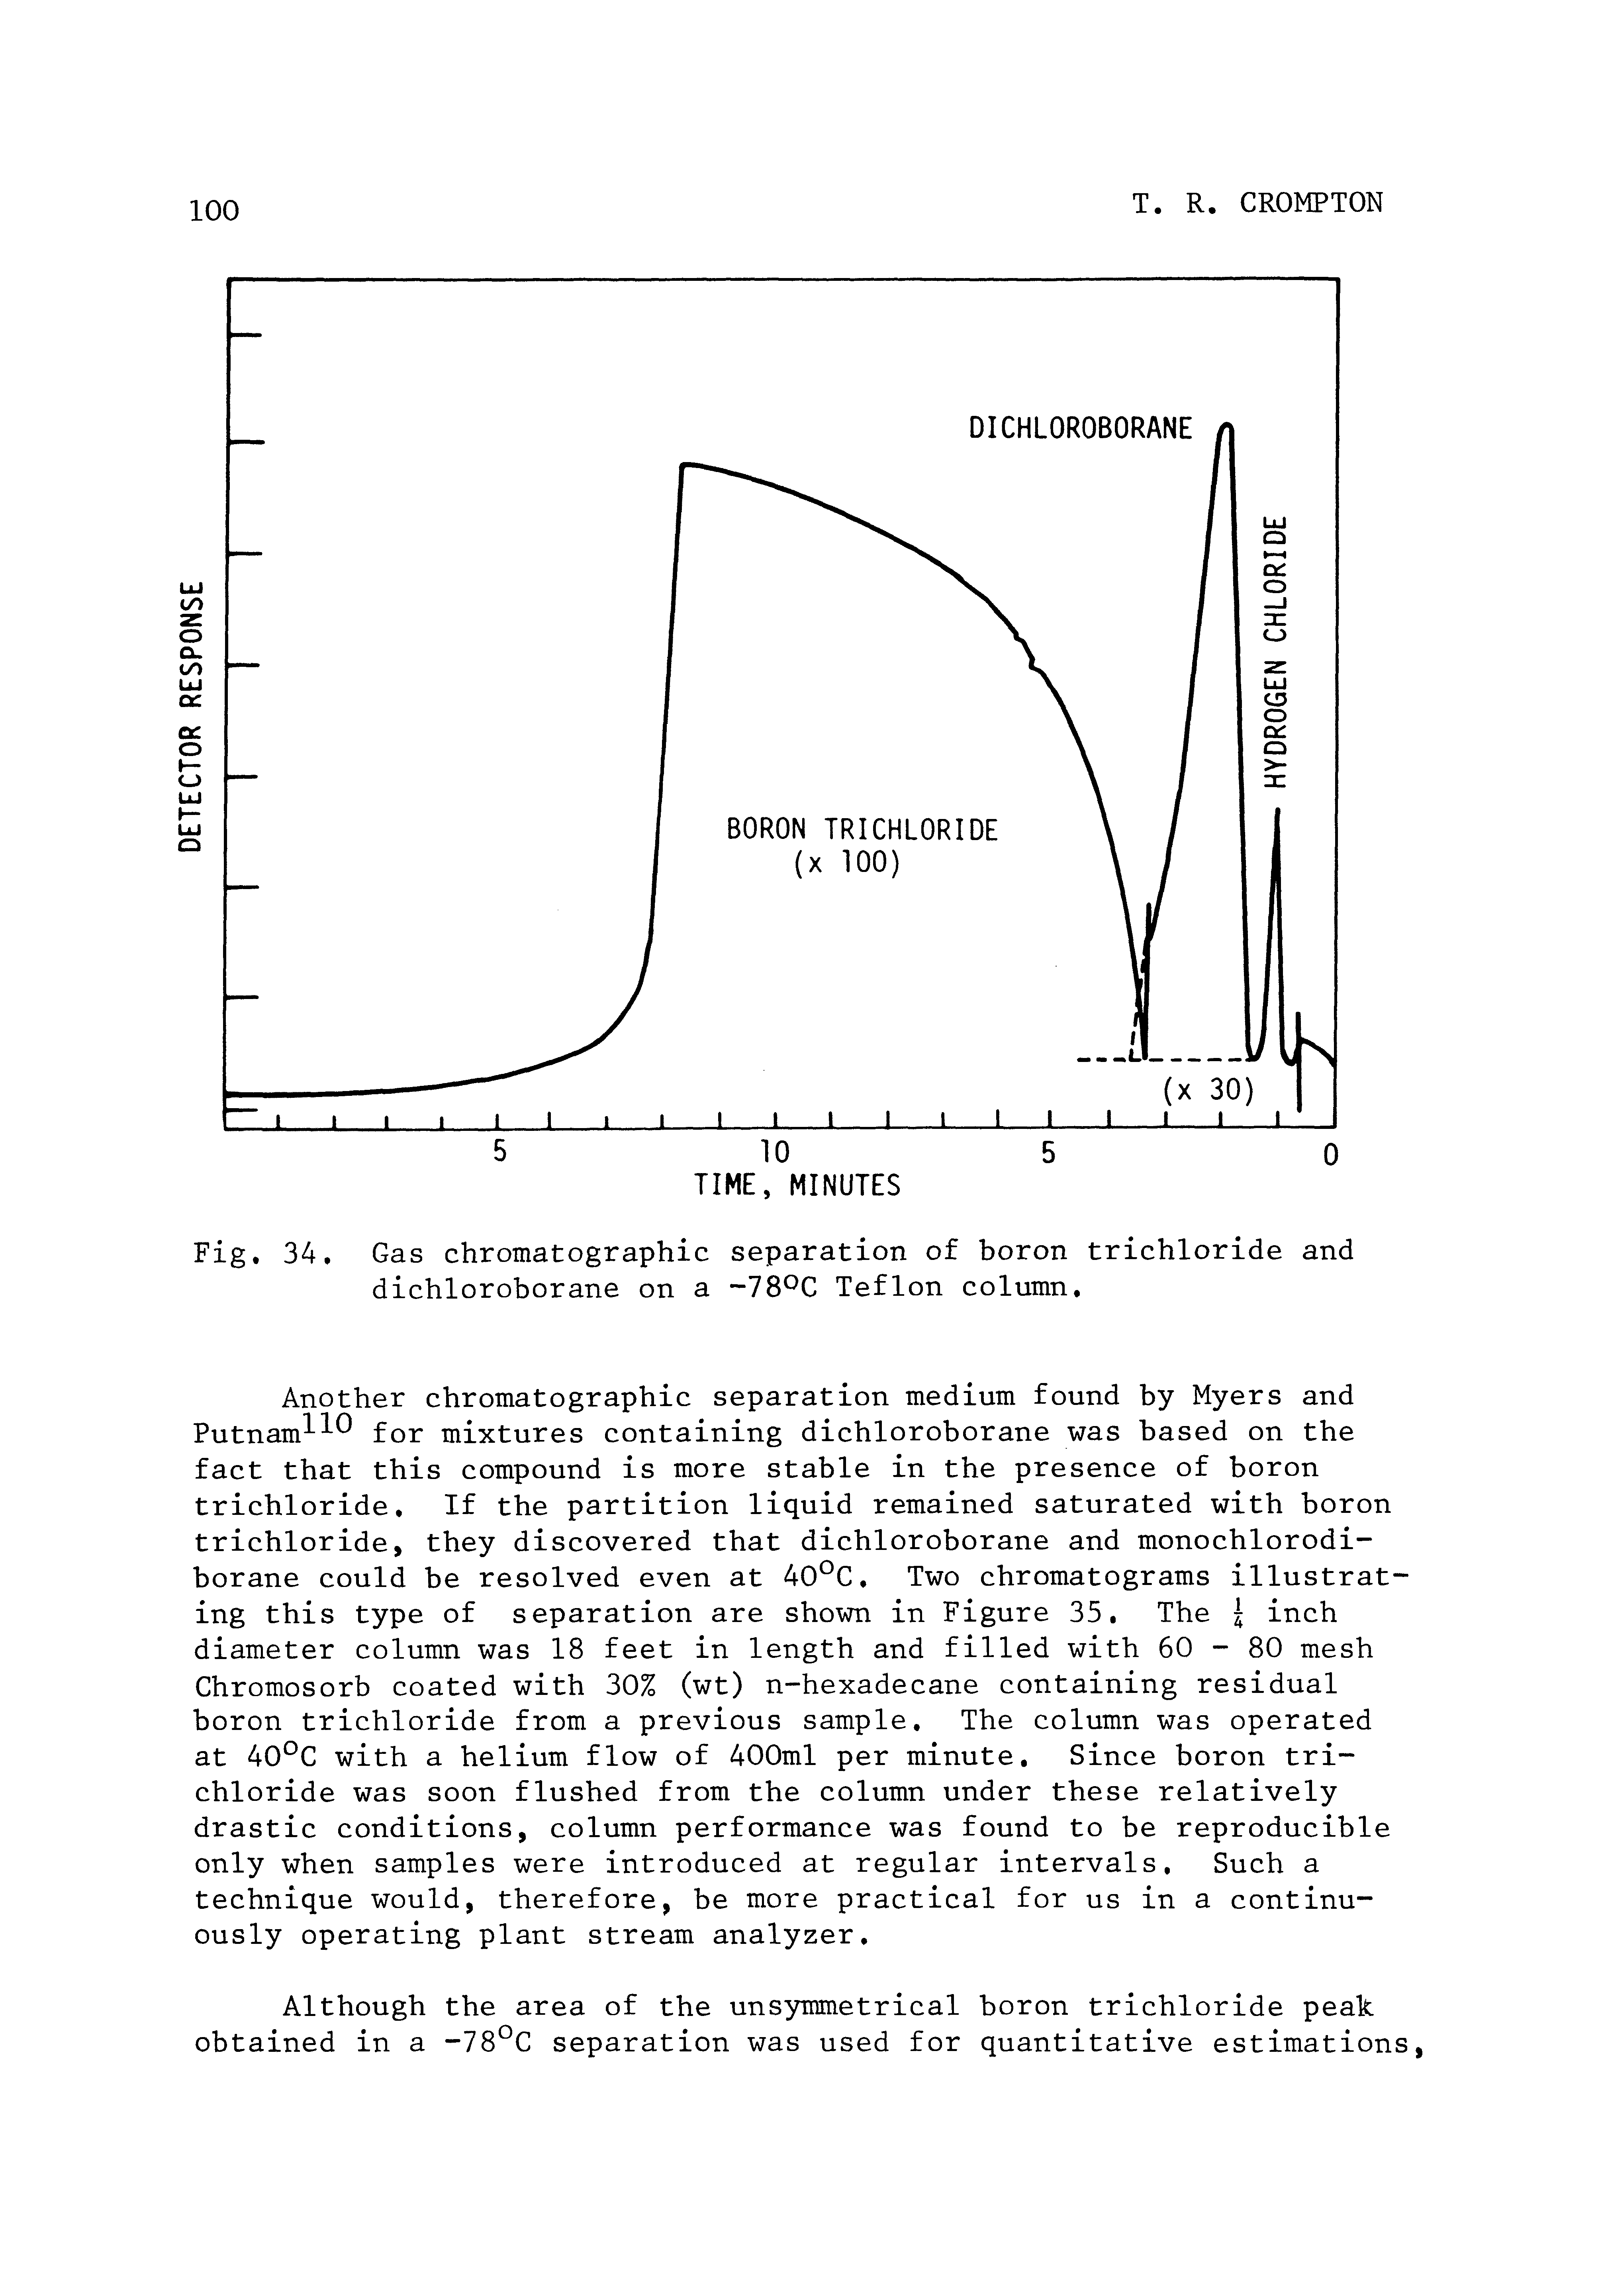 Fig. 34, Gas chromatographic separation of boron trichloride and dichloroborane on a 78 C Teflon column.